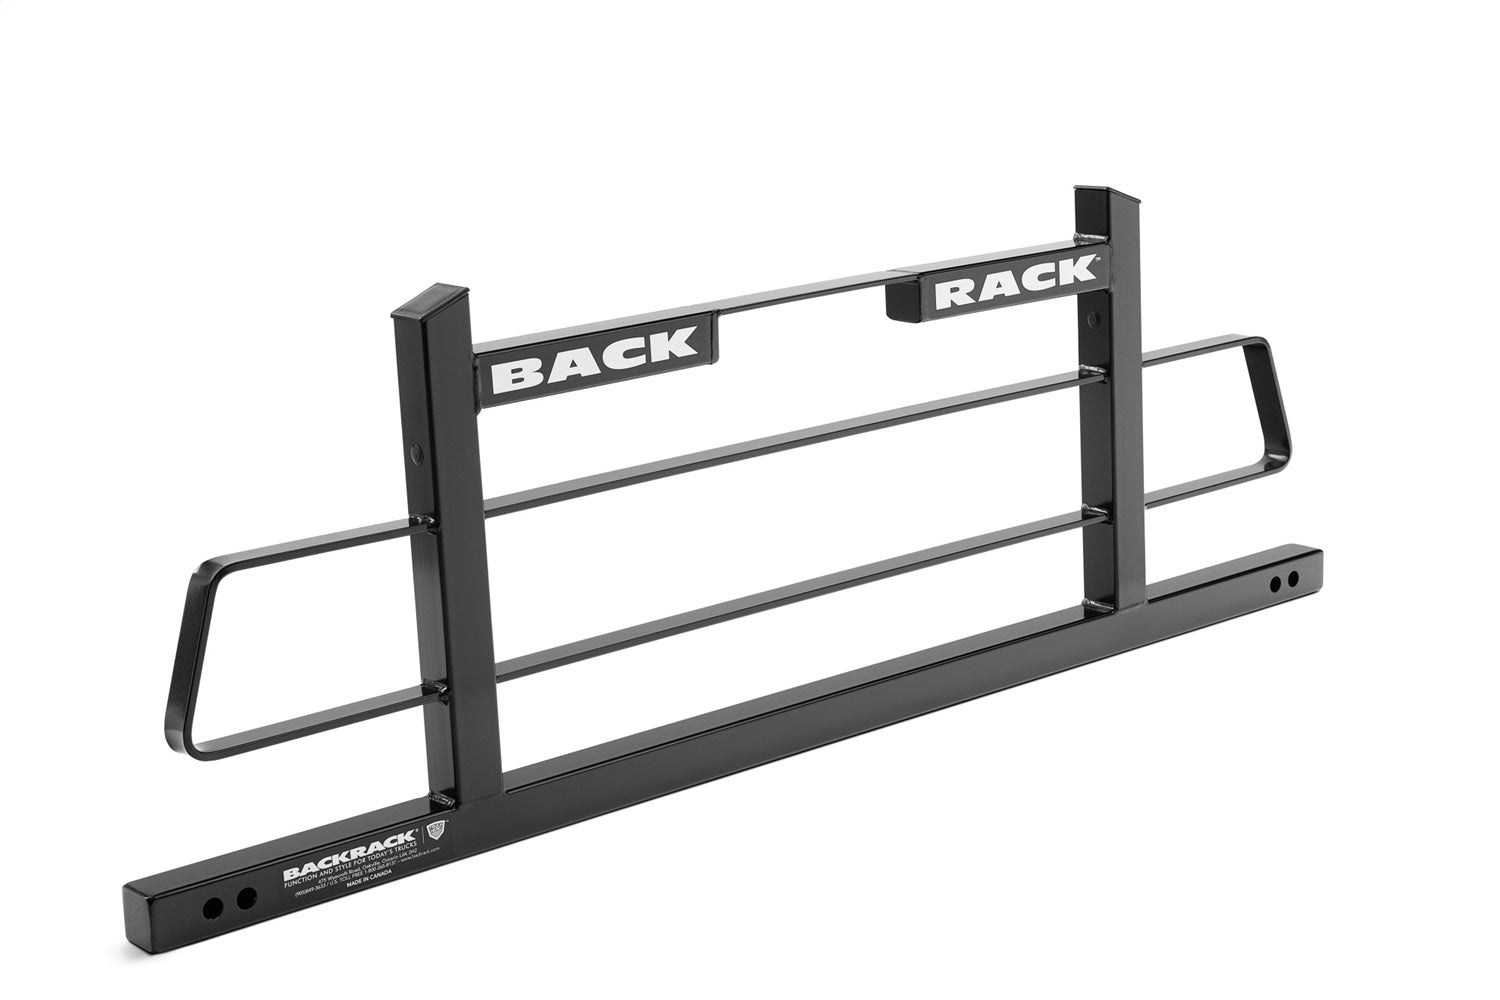 Backrack 15018 Backrack Headache Rack Frame